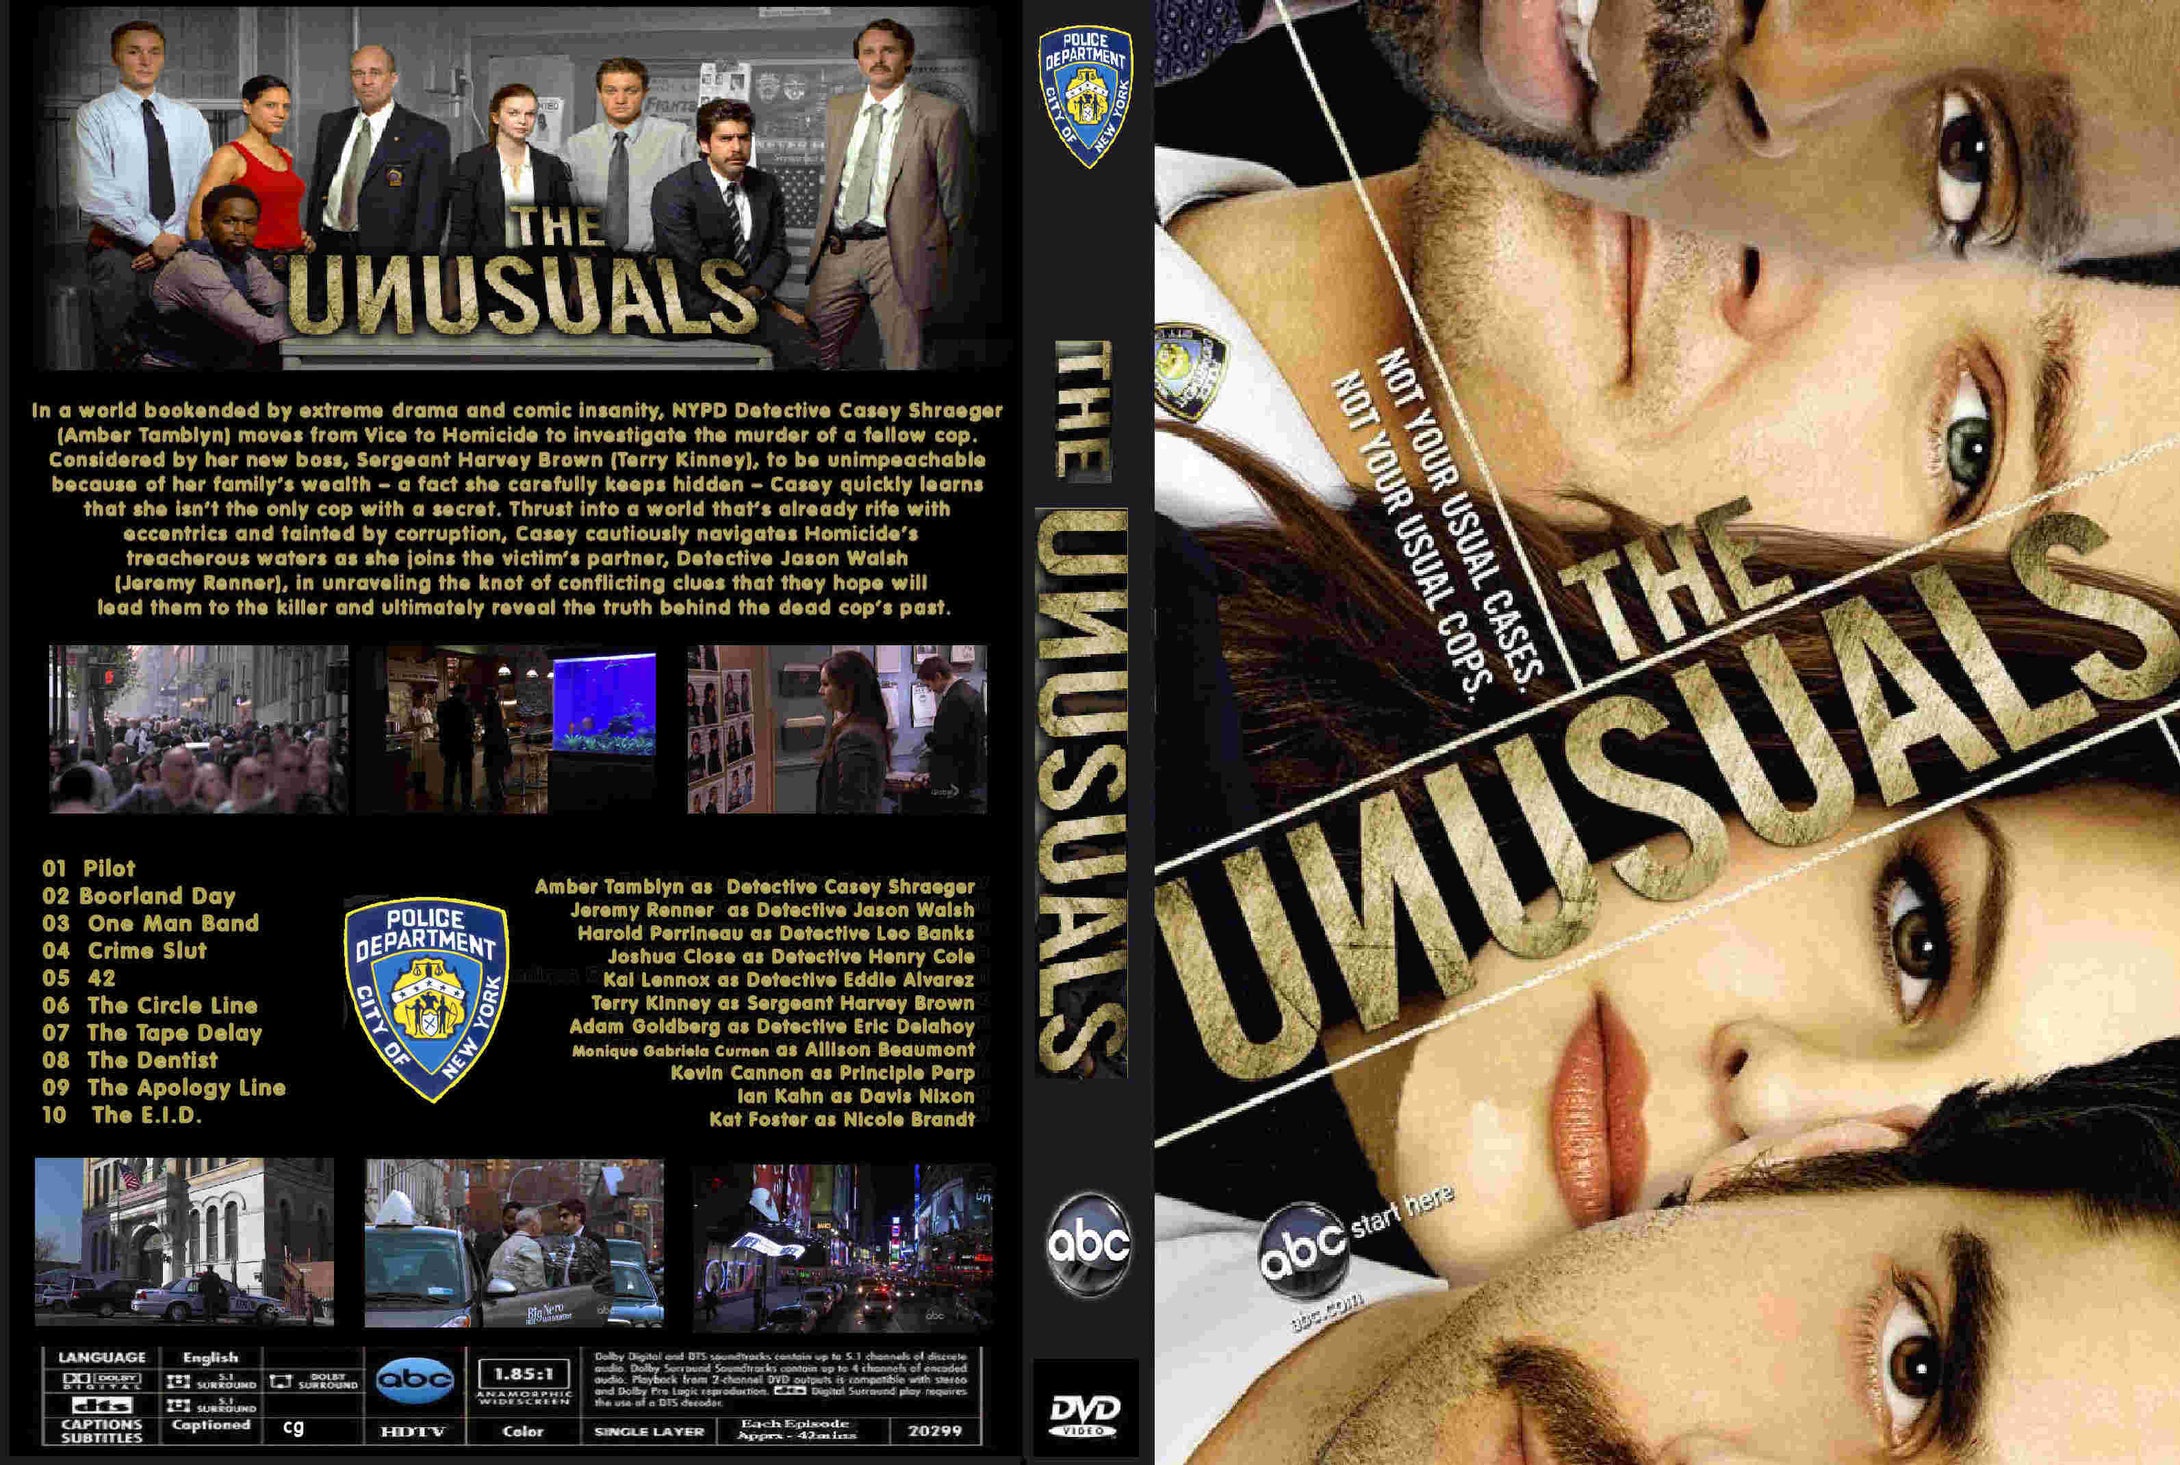 The Unusuals 4 DVD